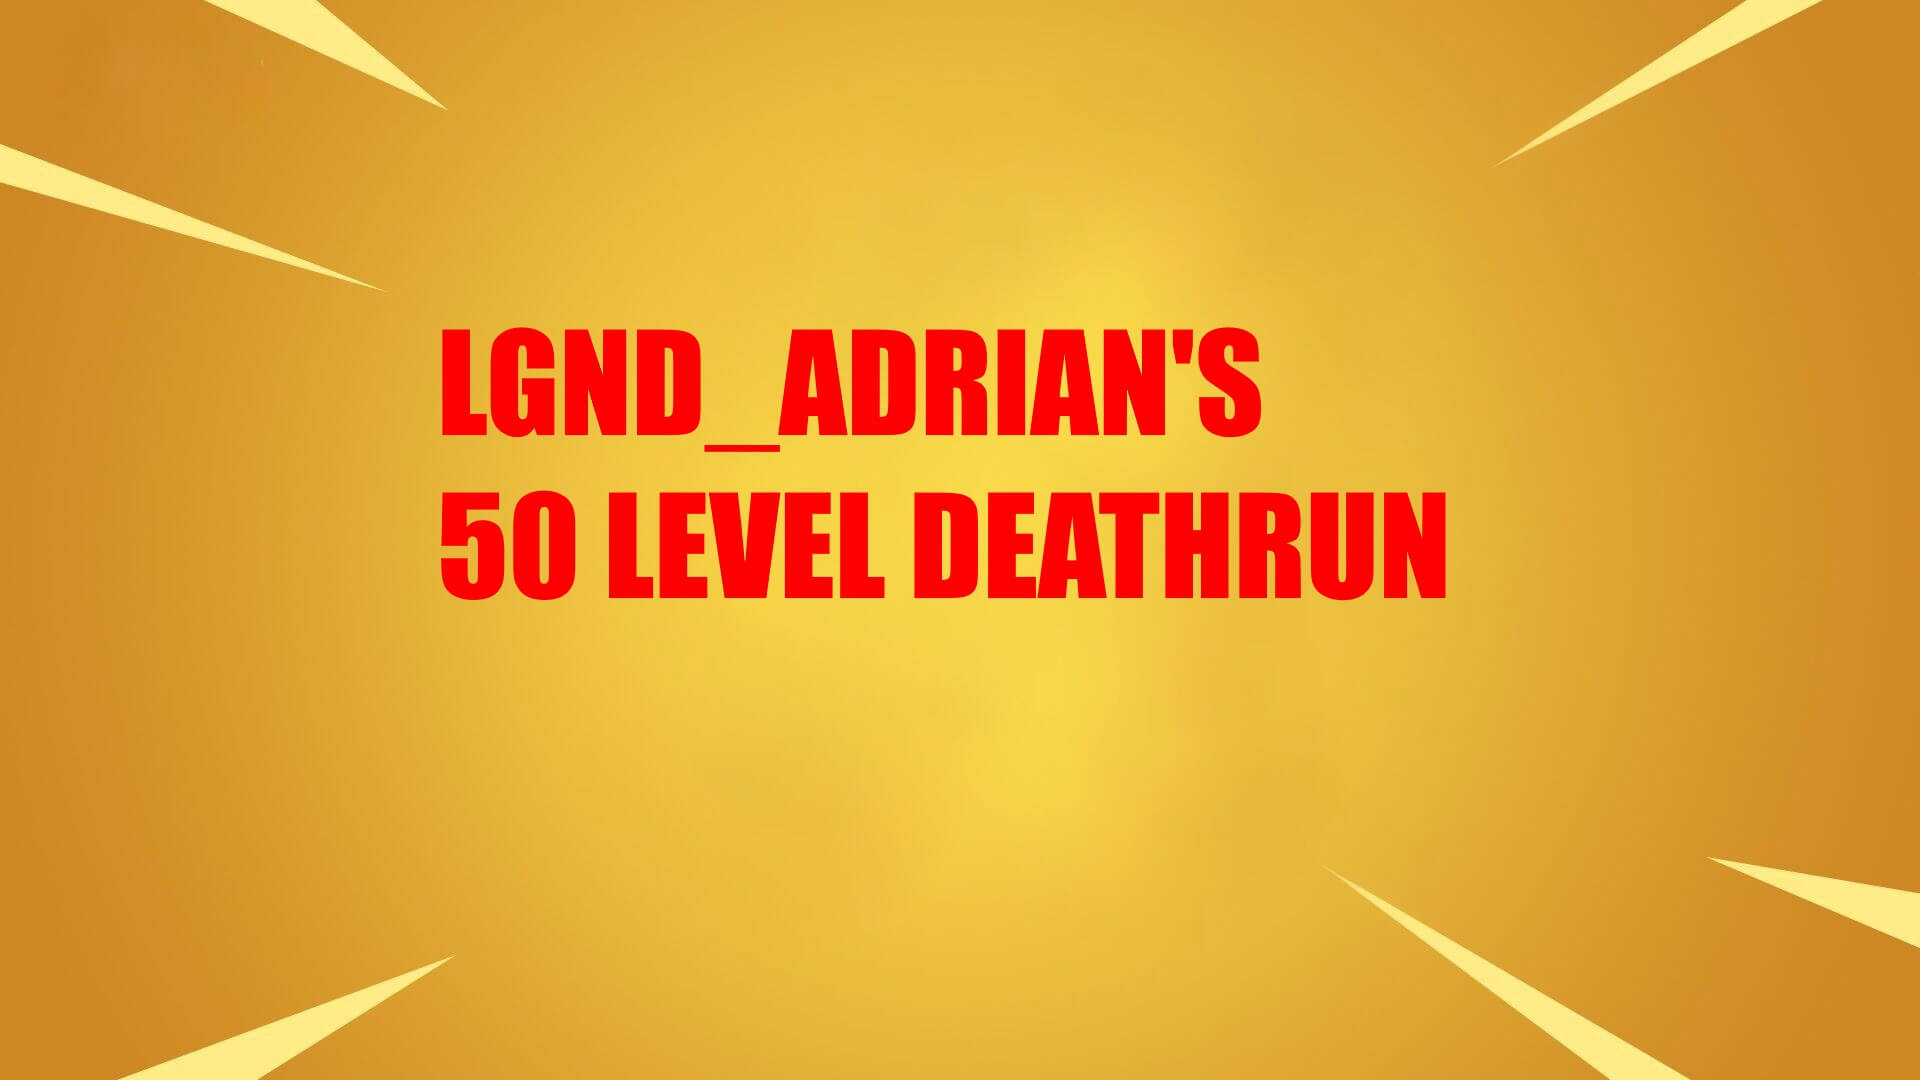 LGND_ADRIAN'S 50 LEVEL DEATHRUN